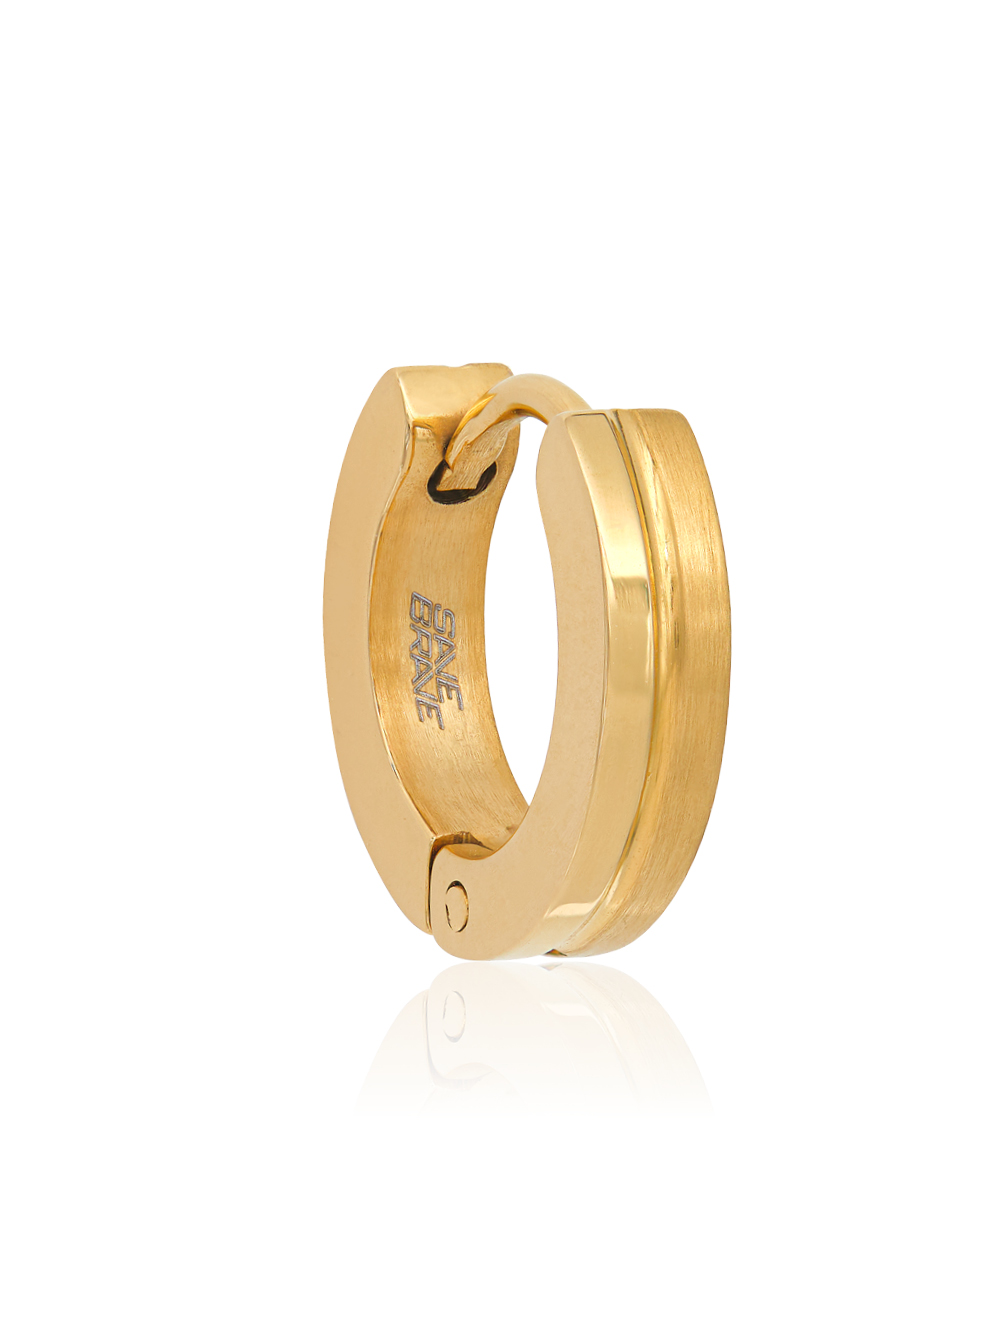 Jean Diamond Ear Stud For Men Online Jewellery Shopping India | Rose Gold  14K | Candere by Kalyan Jewellers